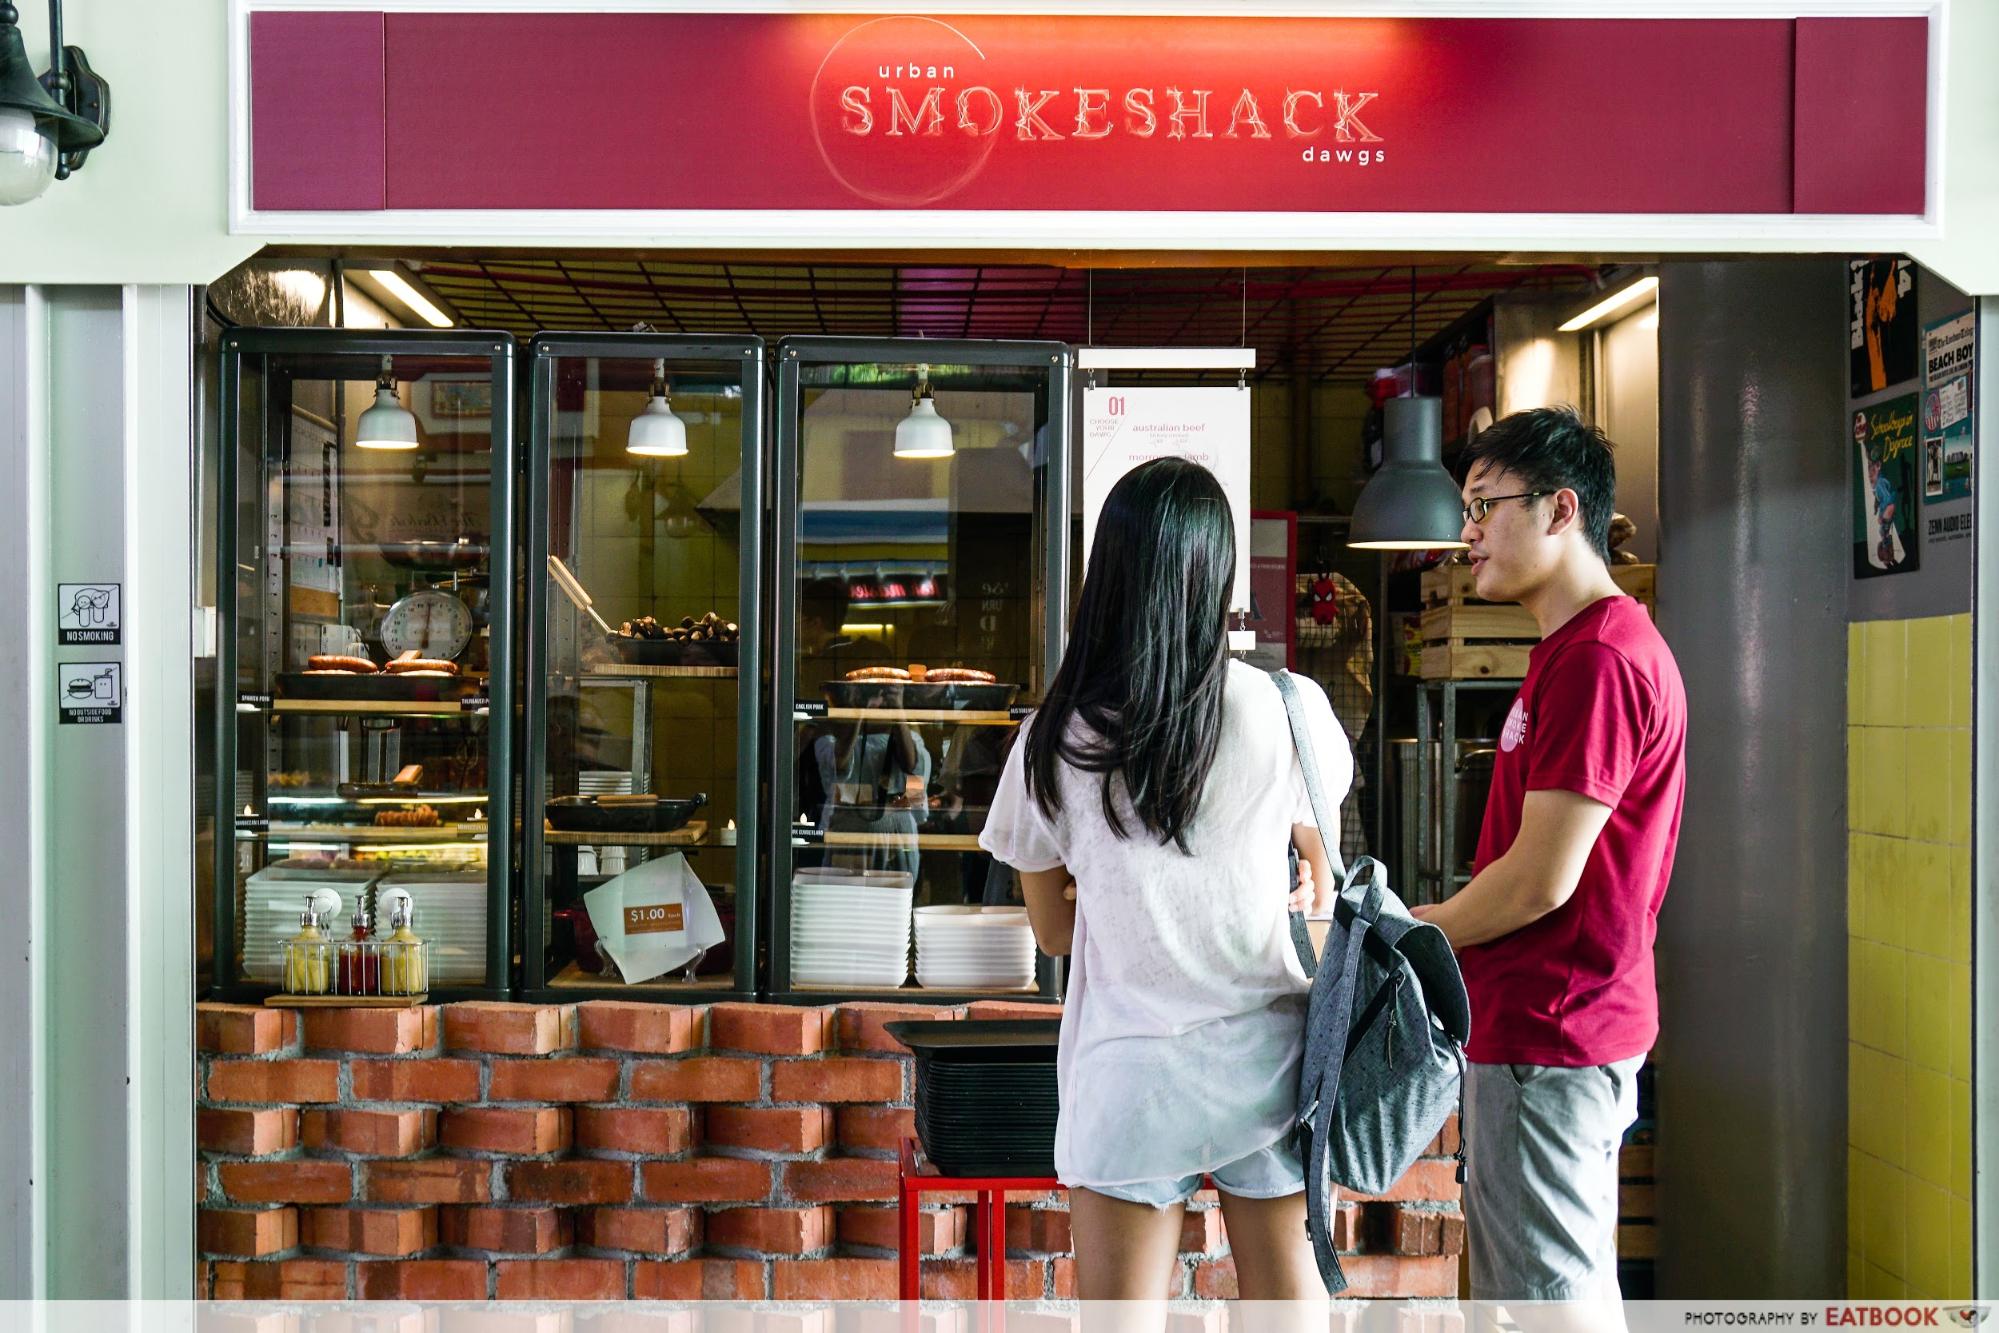 Urban Smokeshack - stall front